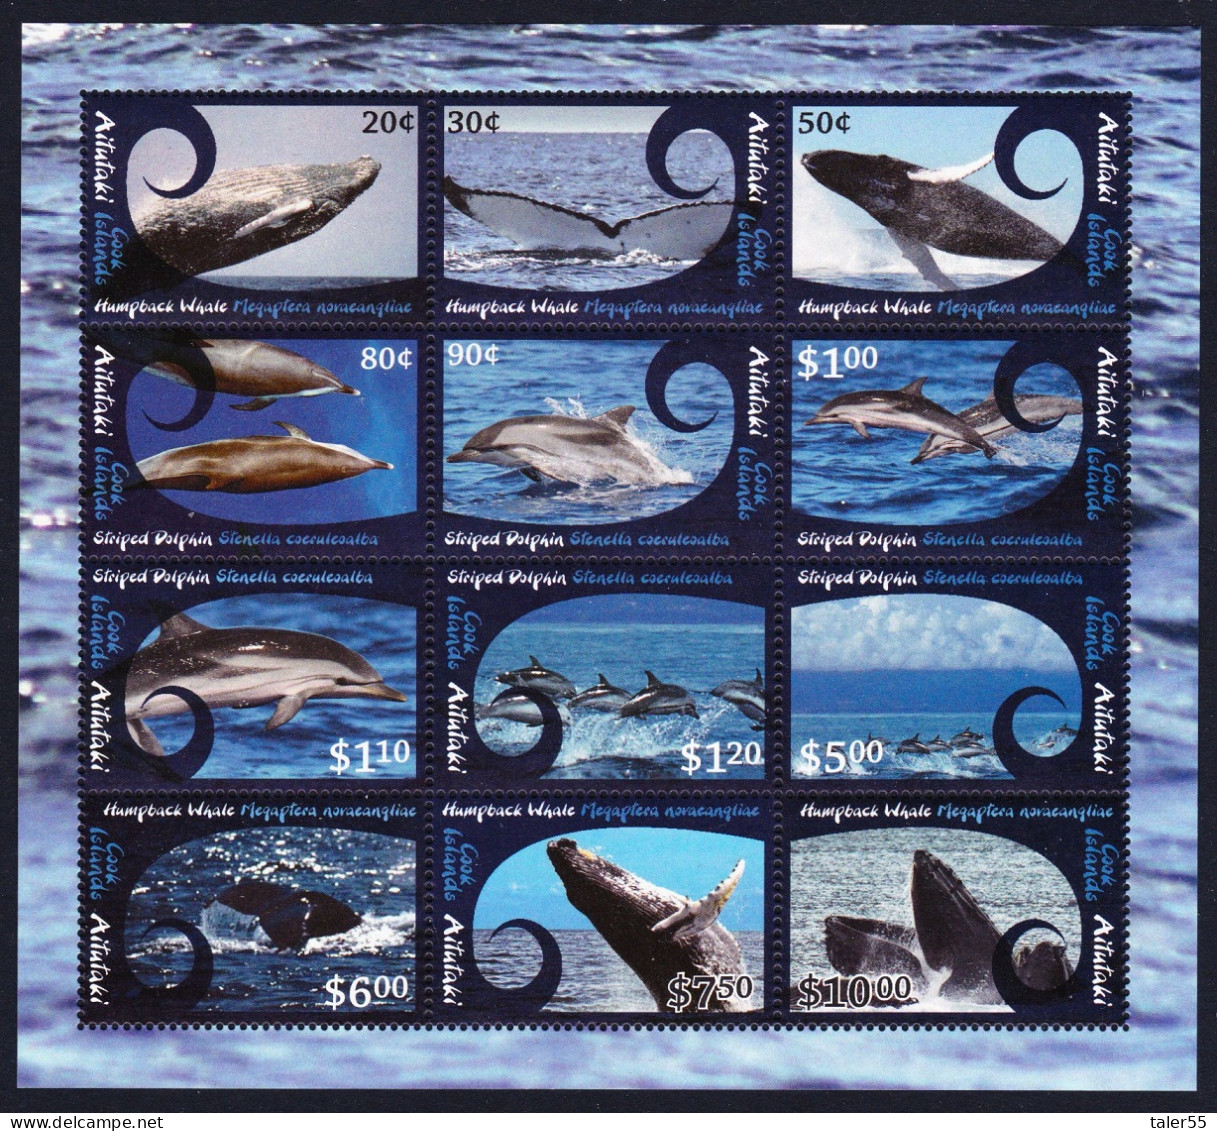 Aitutaki Cetaceans Whales Dolphins 12v Sheetlet 2012 MNH SG#MS802 Sc#593 - Aitutaki